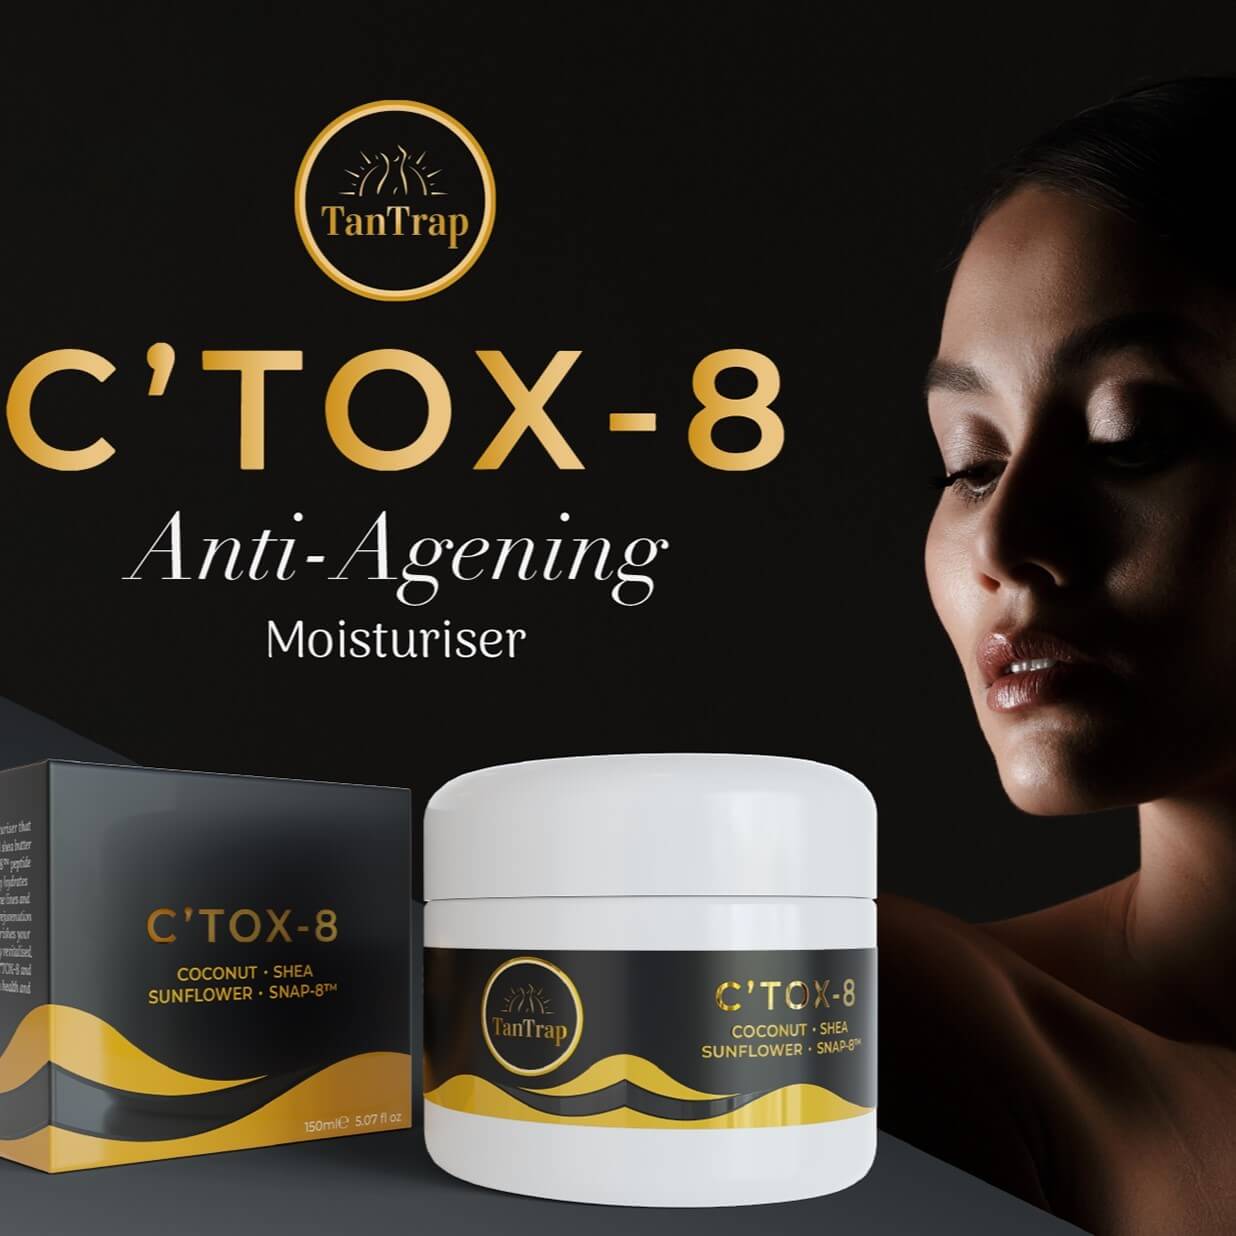 C'TOX-8 anti aging moisturiser